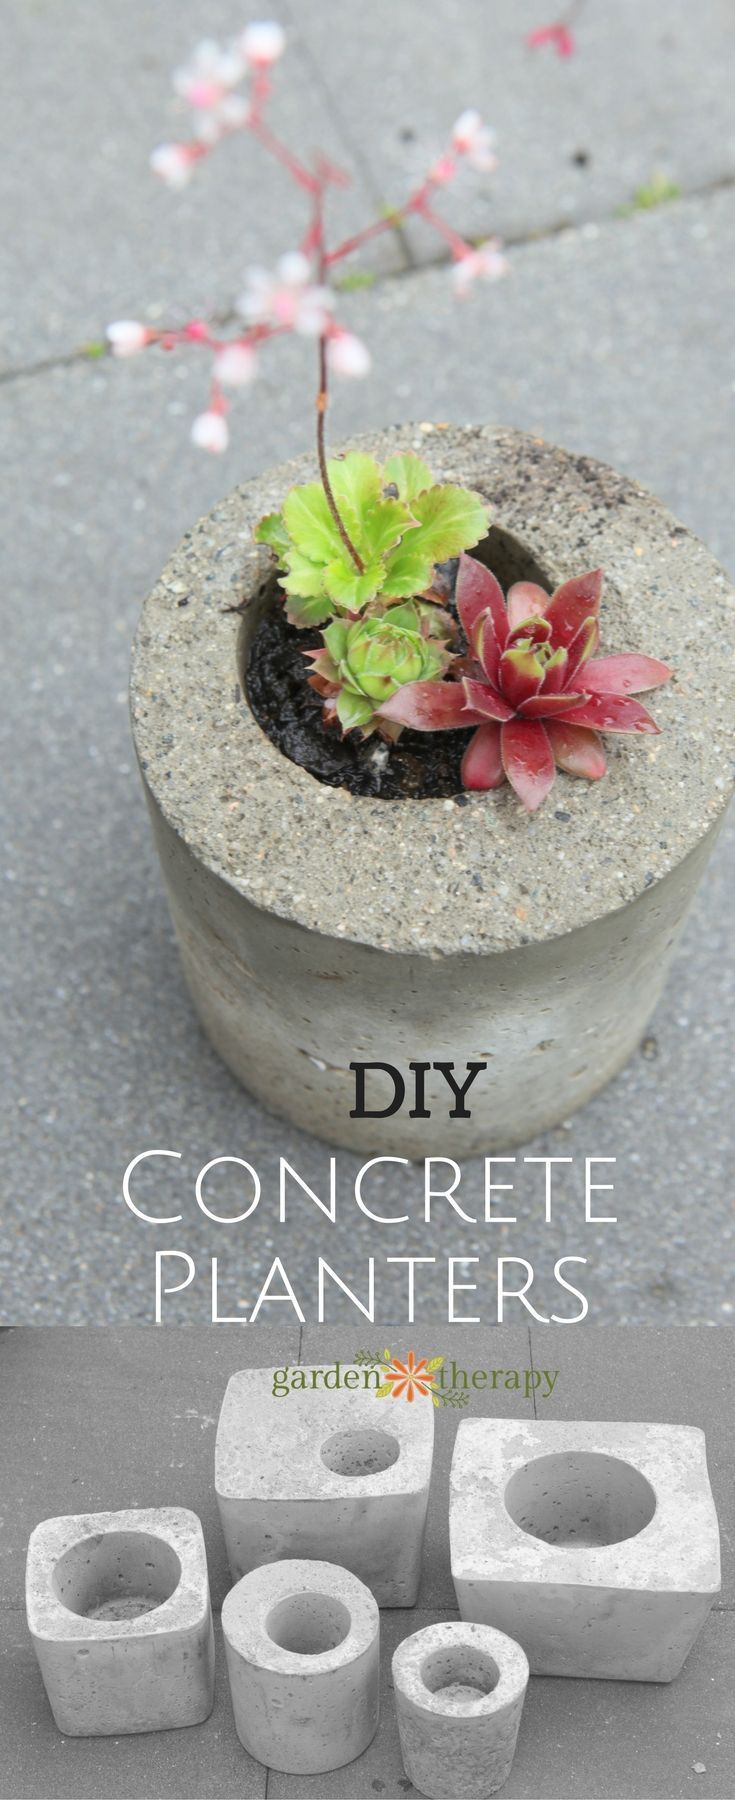 How to Make Concrete Planters